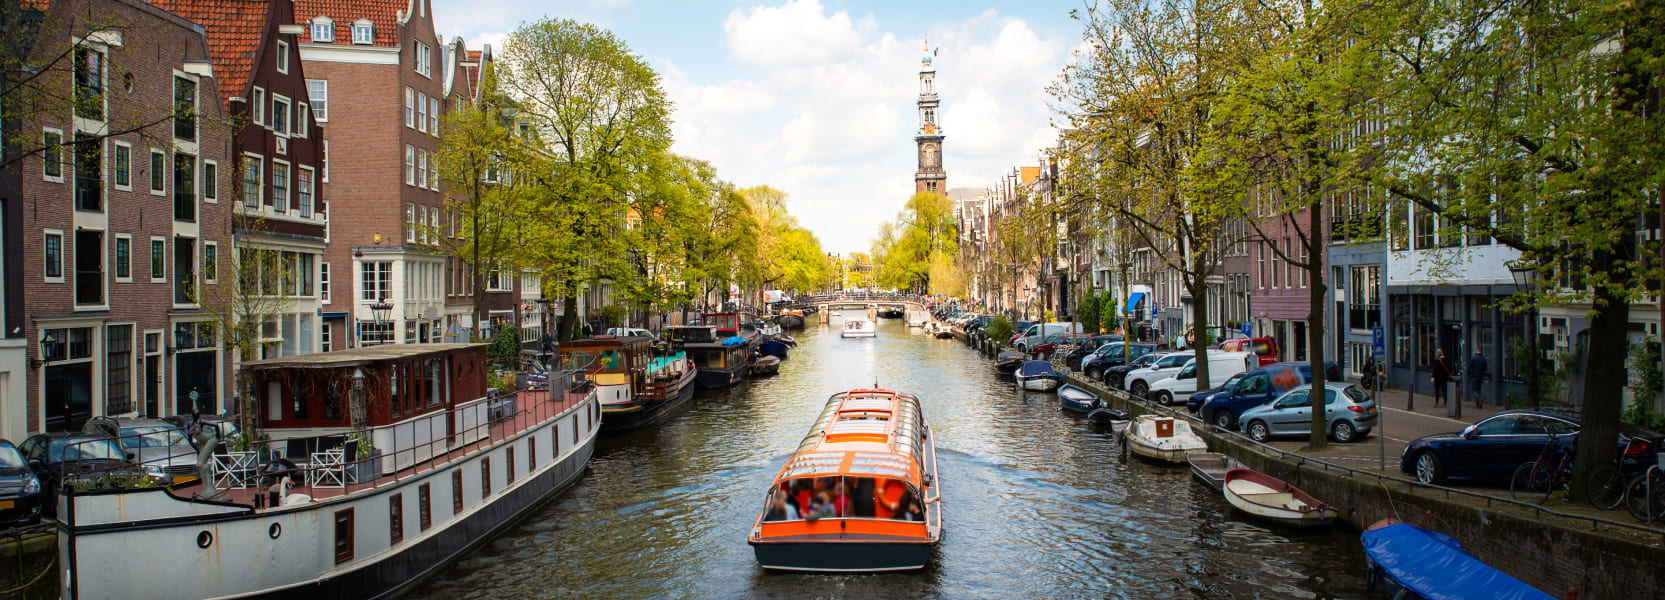 Book your Netherlands visa online